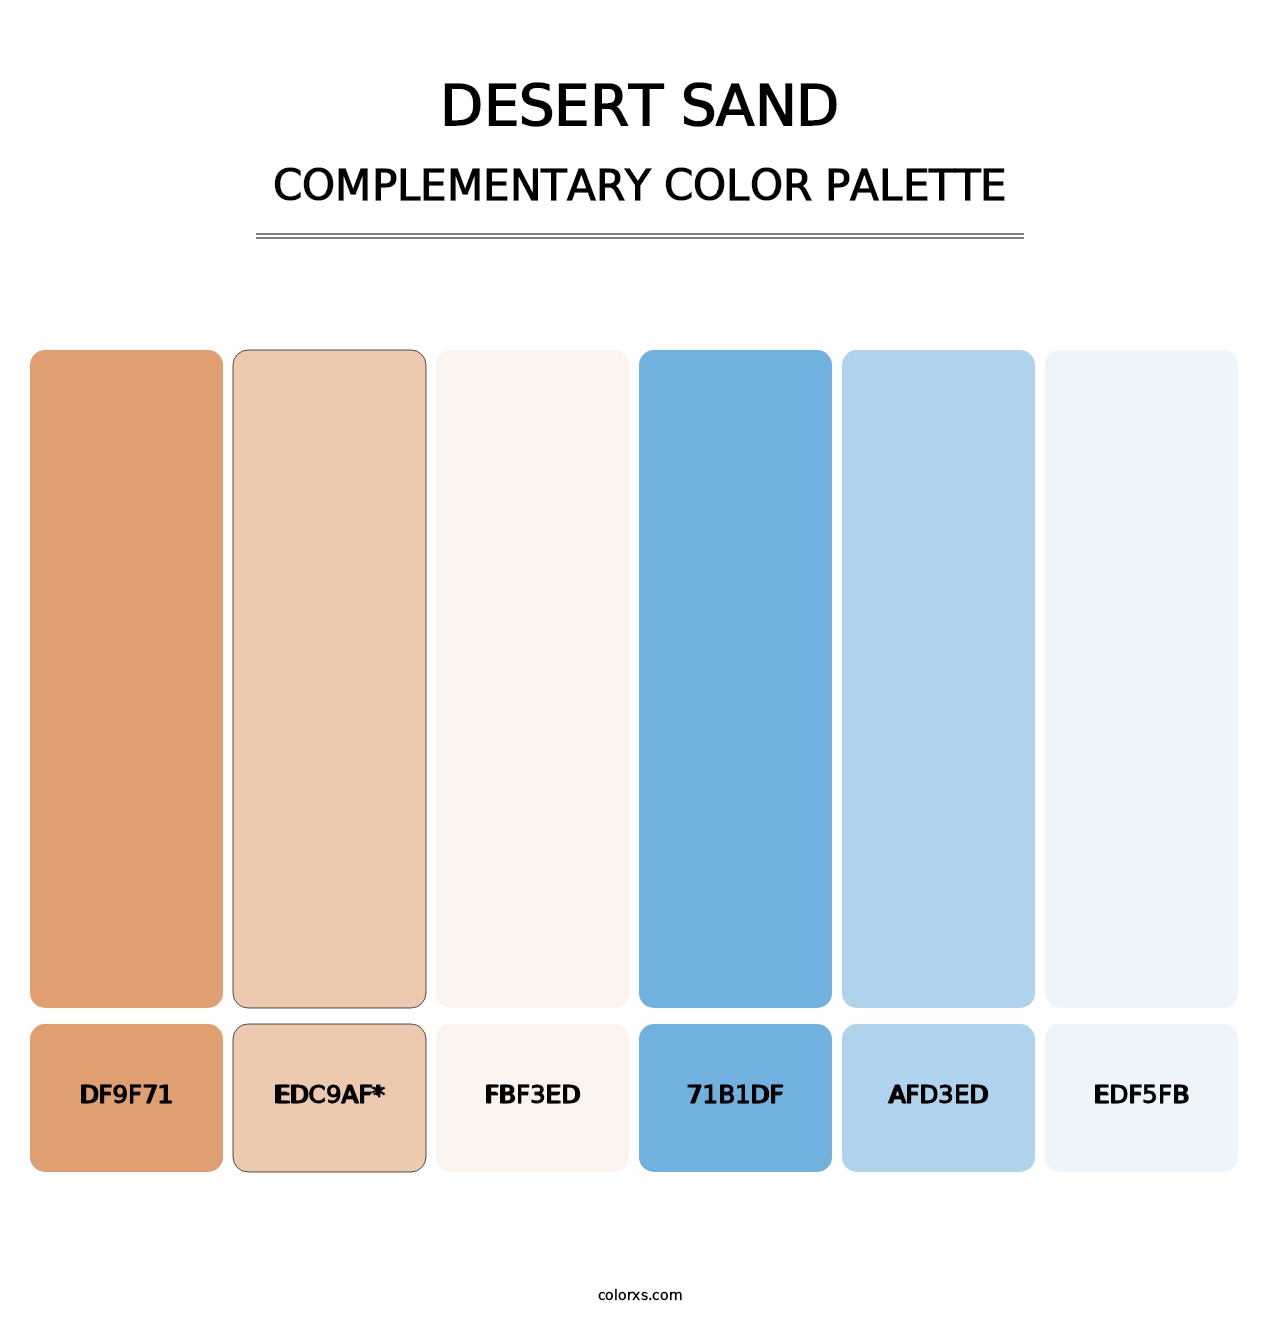 Desert Sand - Complementary Color Palette